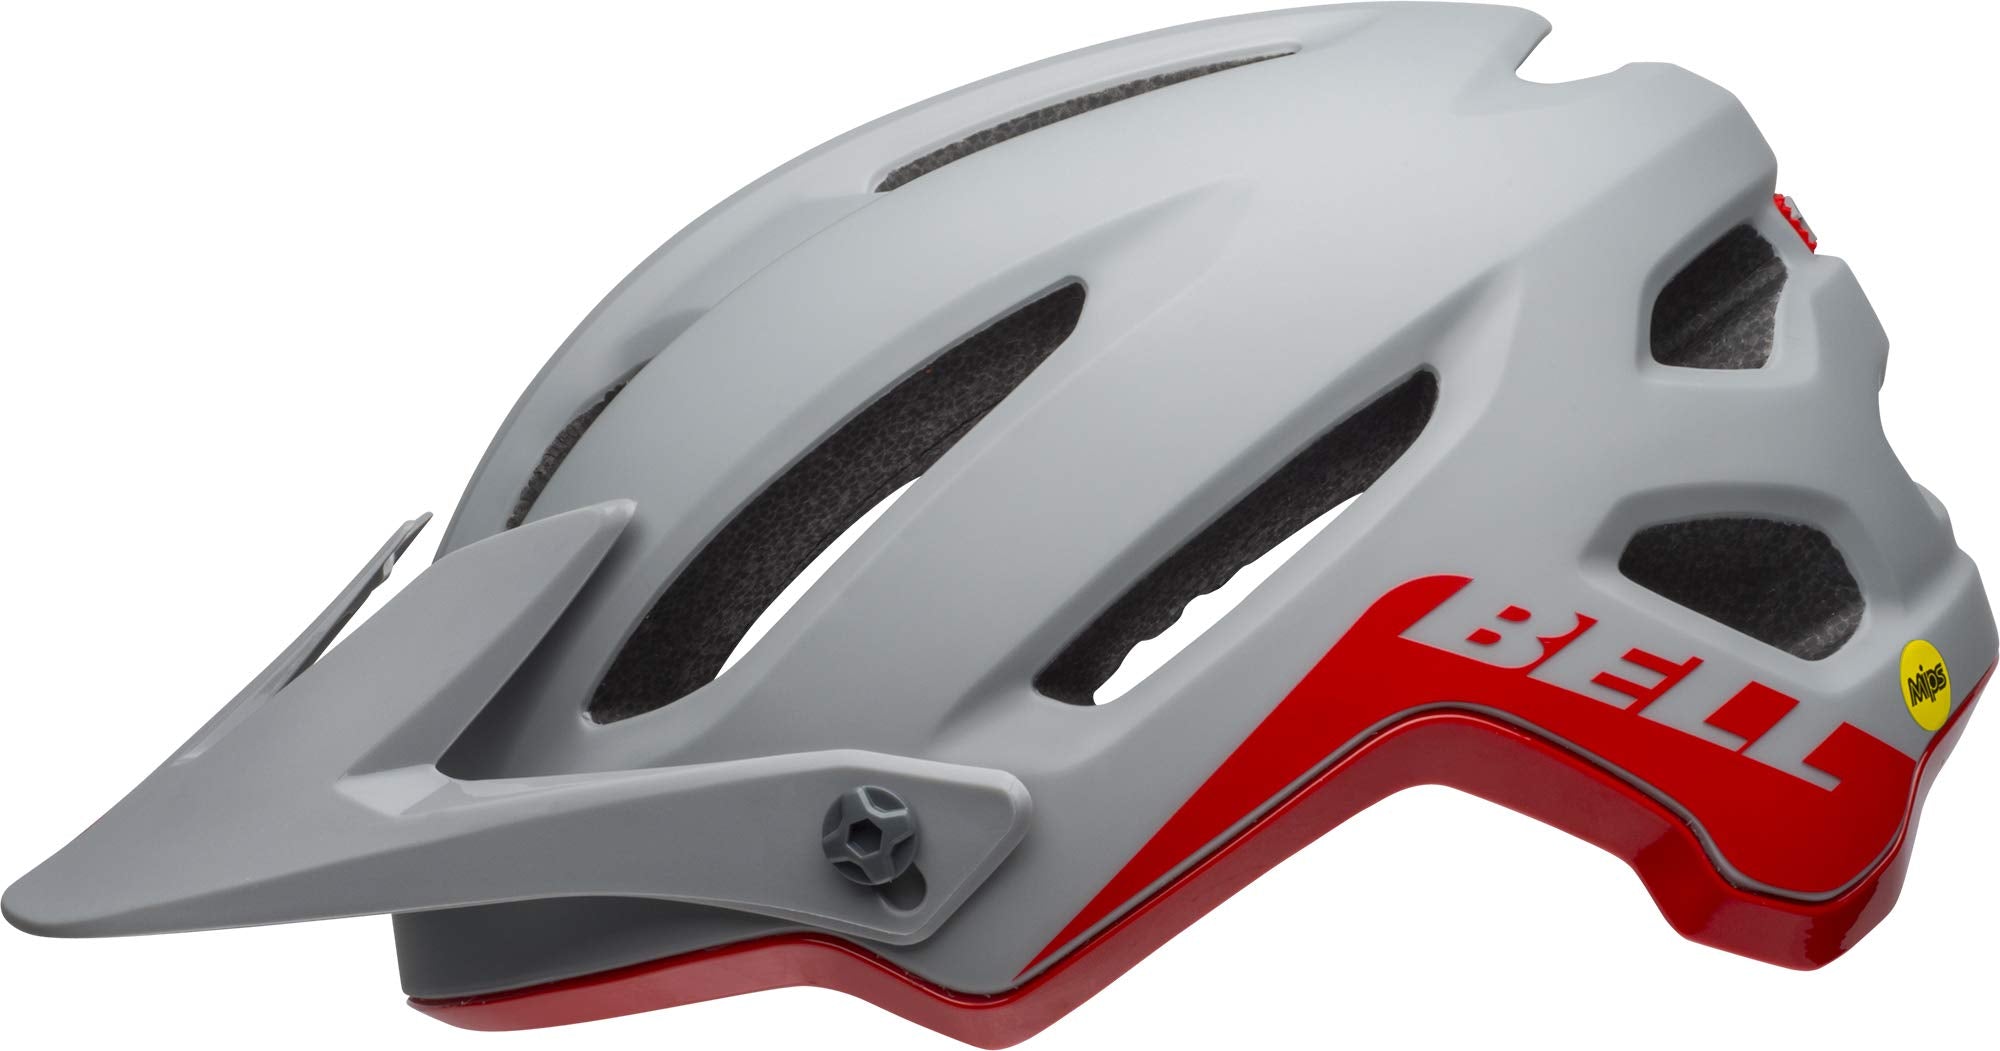 BELL 4Forty MIPS Adult Mountain Bike Helmet  - Very Good